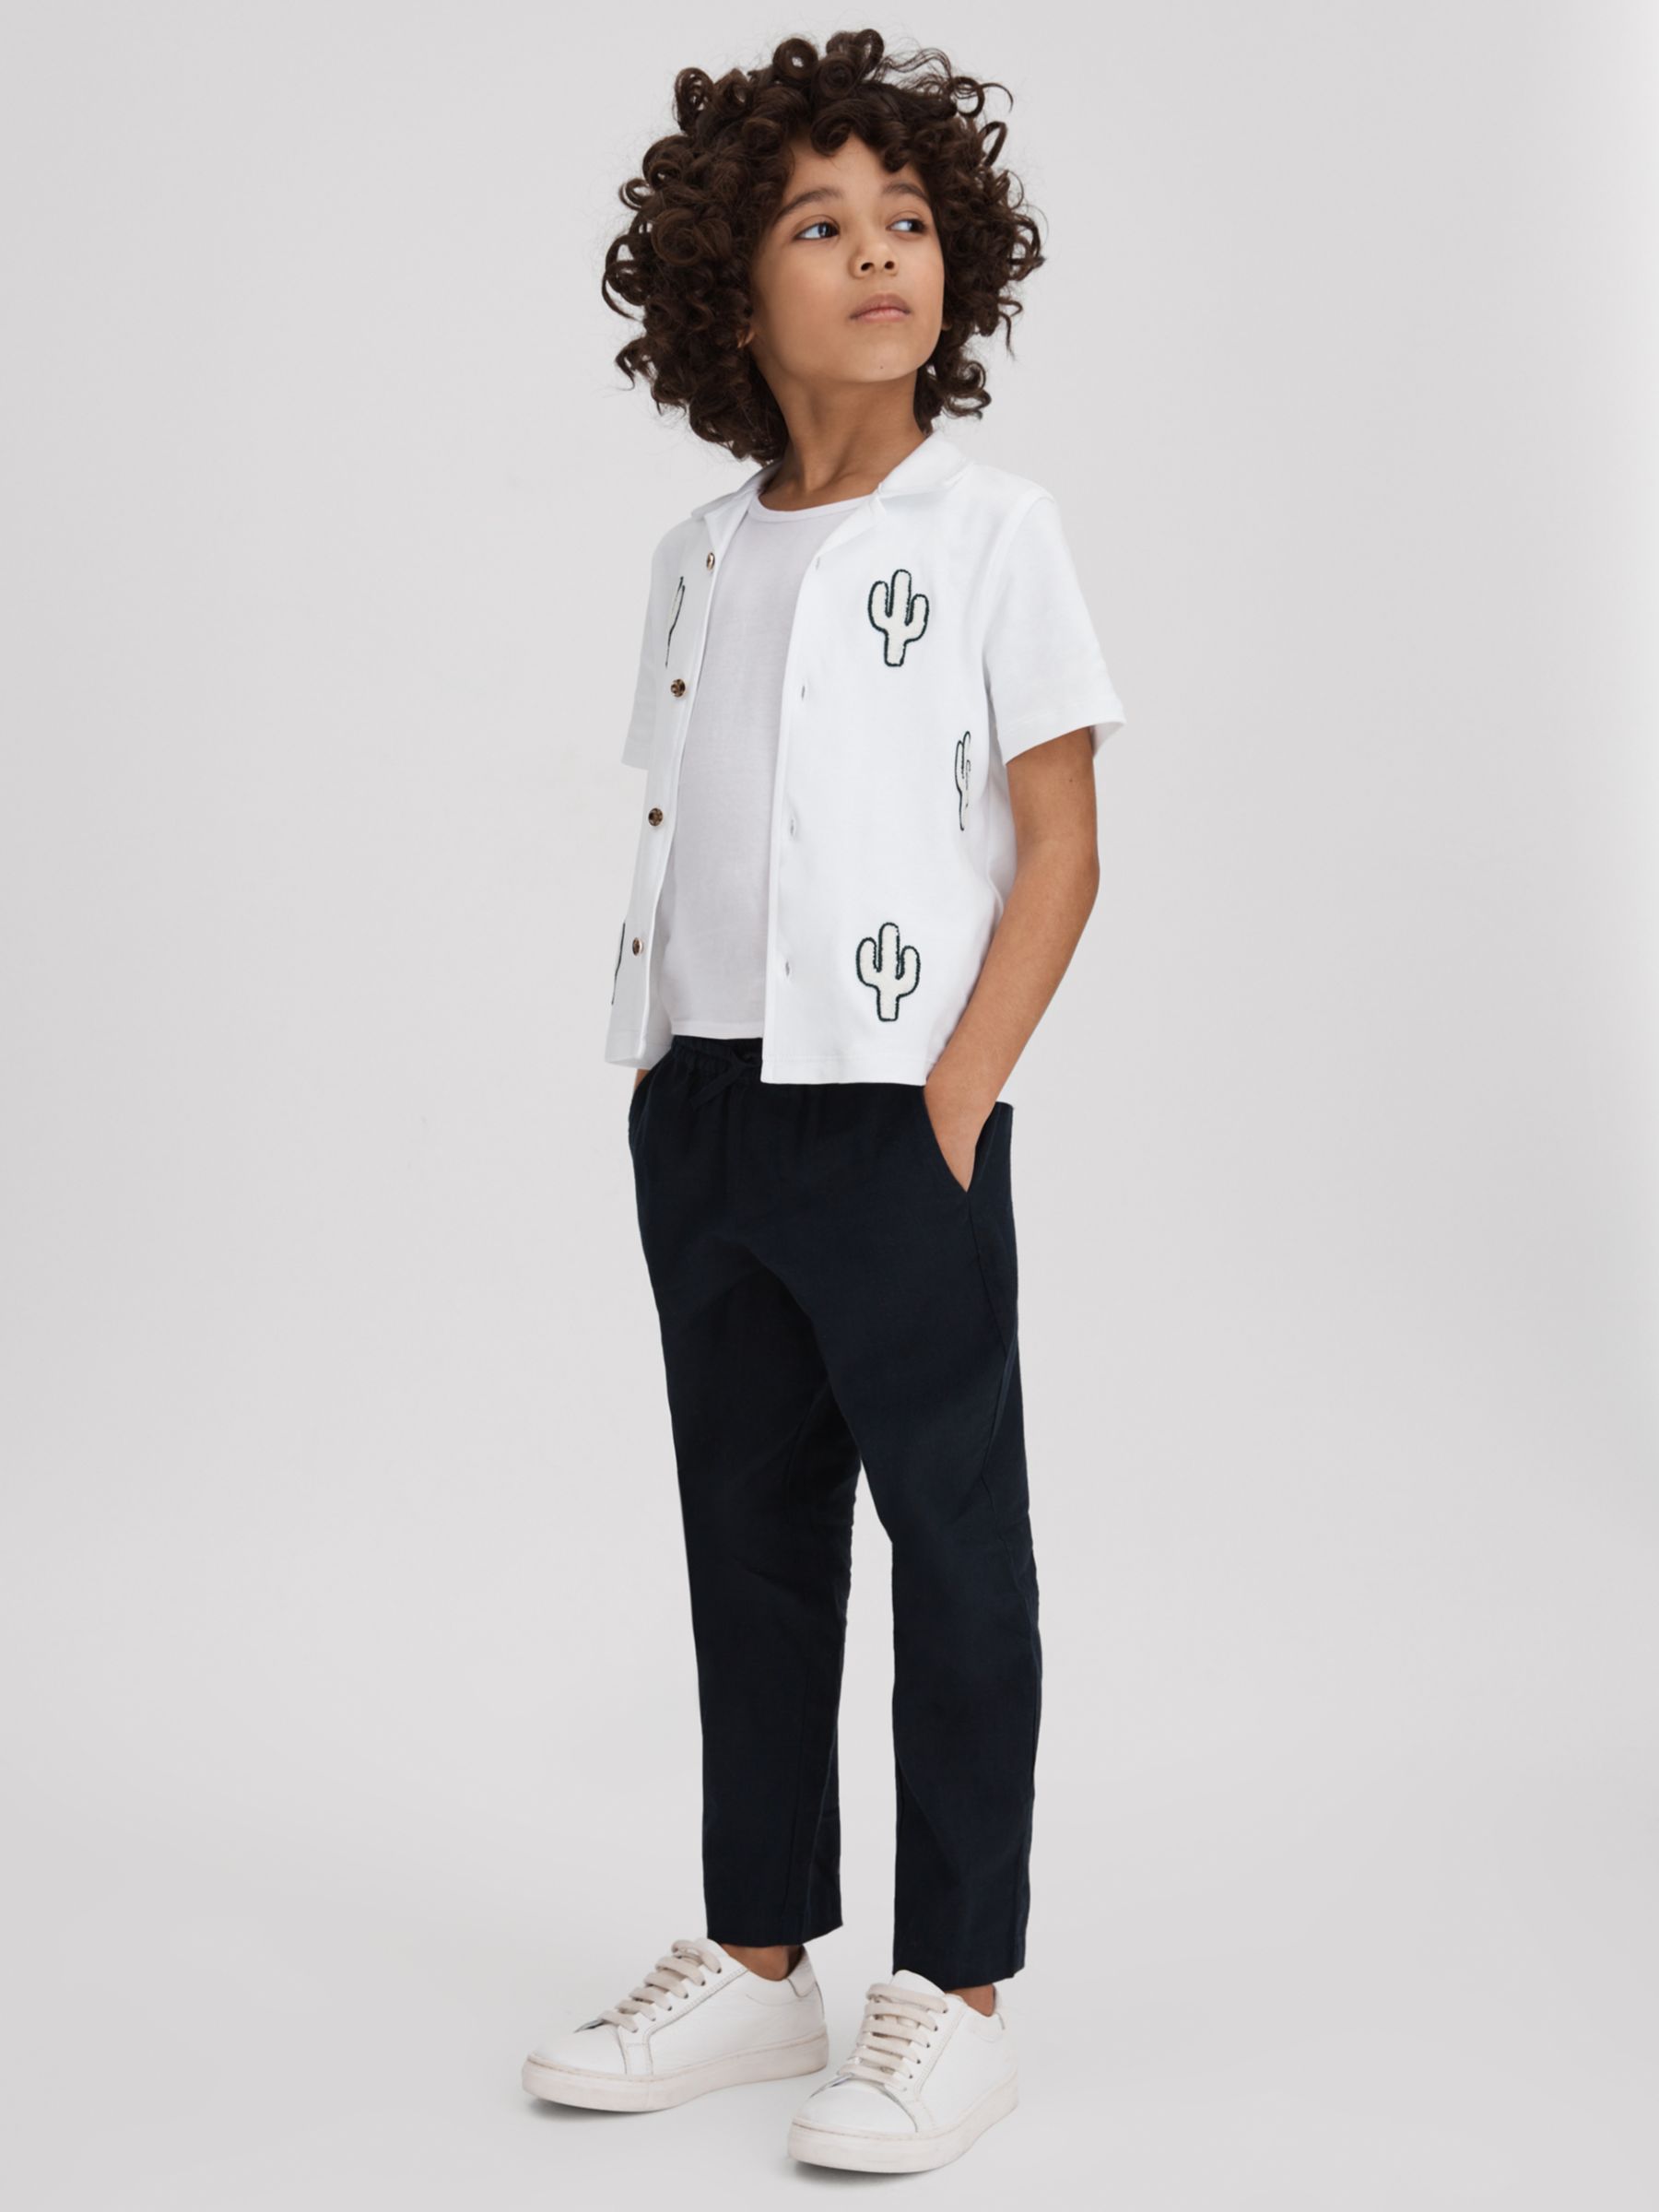 Reiss Kids' Aurora Embroidered Cactus Cuban Shirt, White/Black, 3-4 years